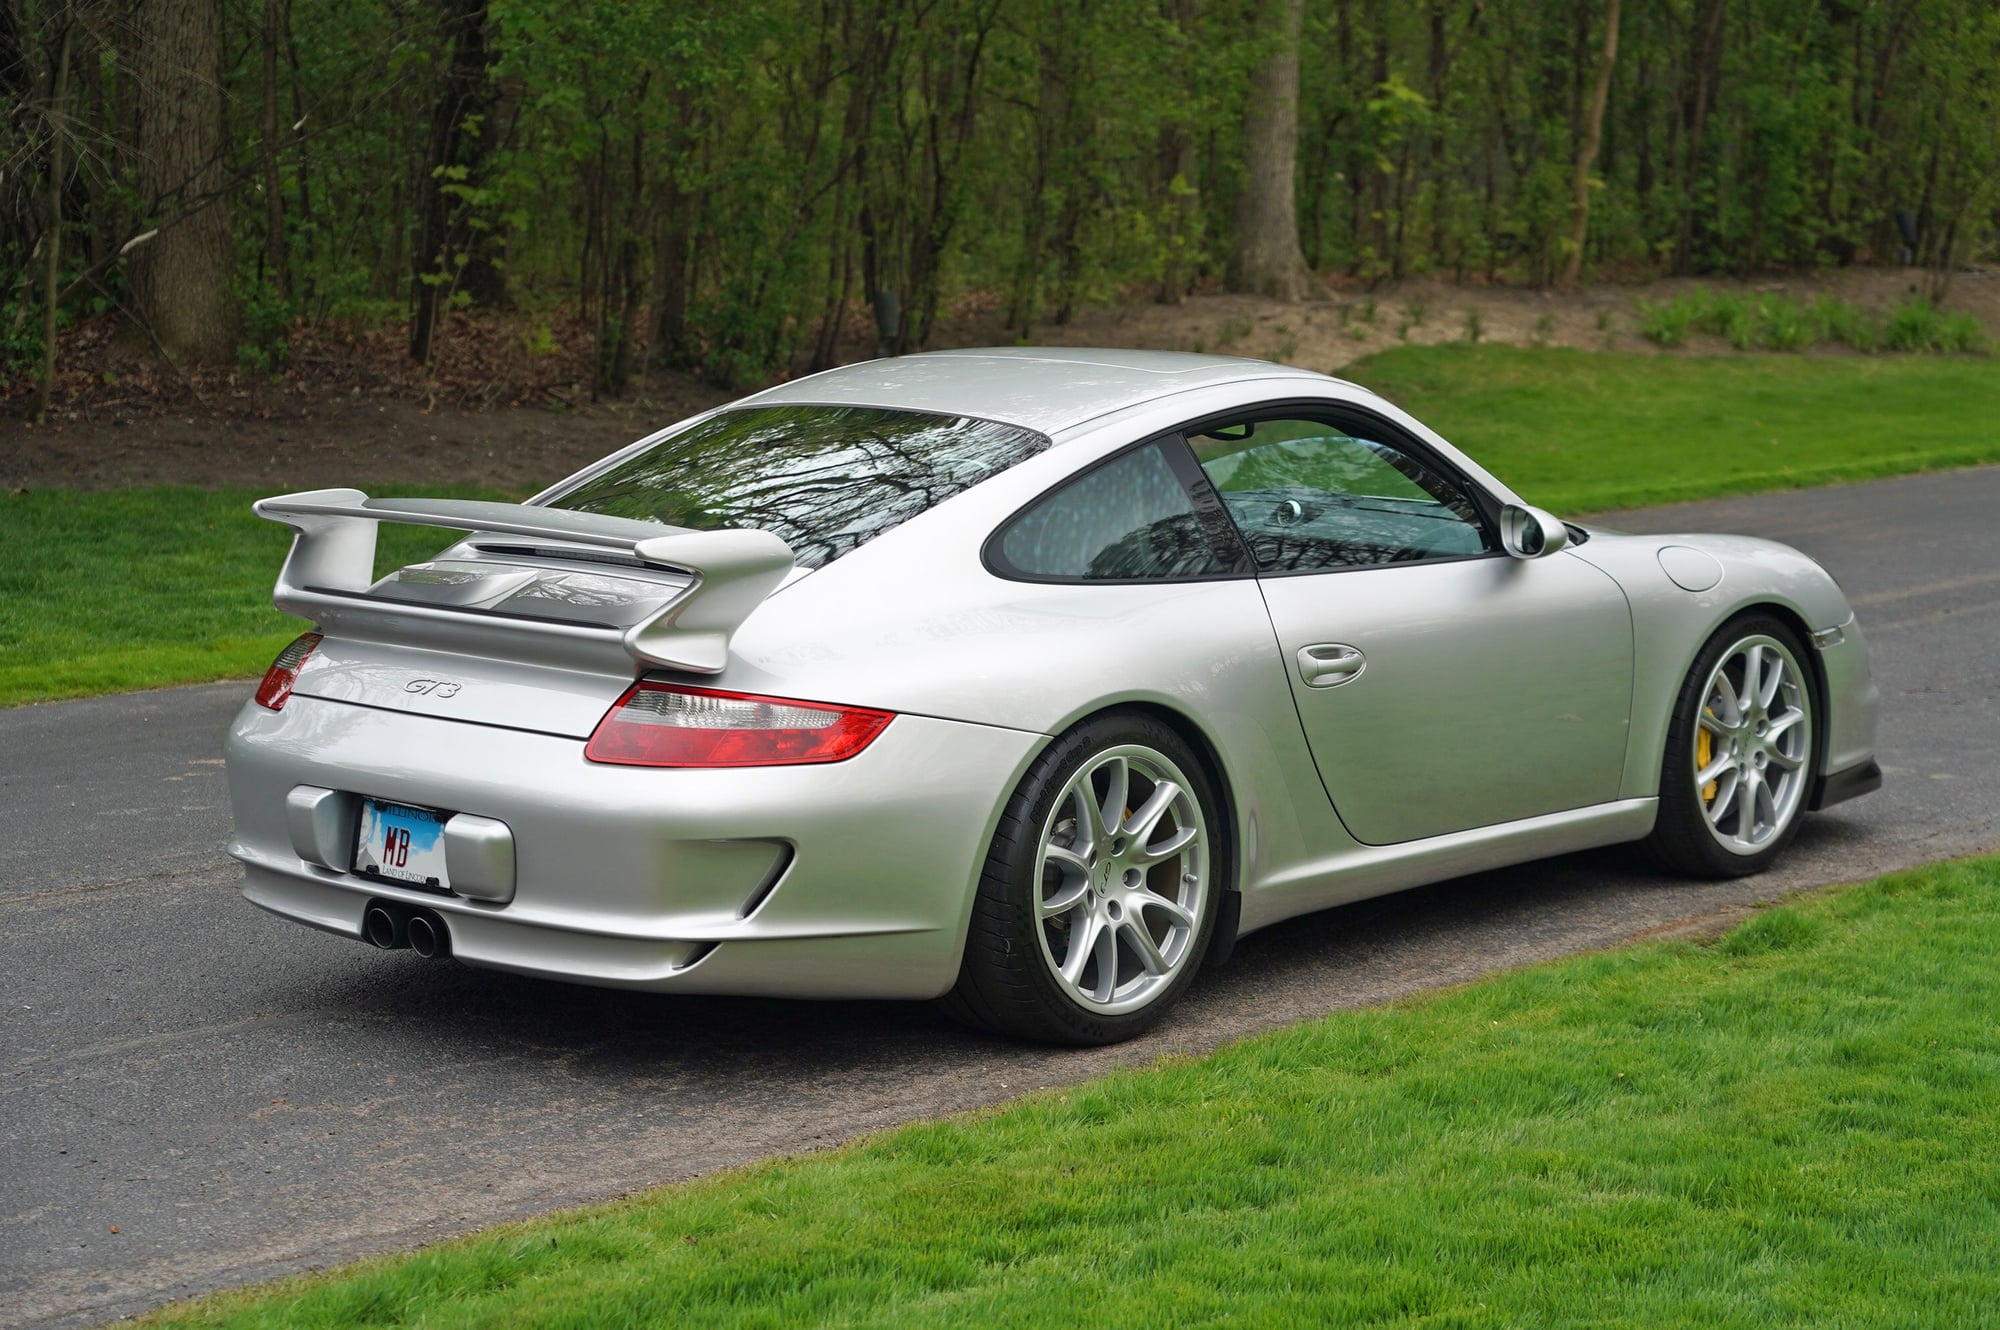 2008 Porsche 911 - 2008 Porsche GT3 - Used - VIN WPOAC29948S792307 - 36,108 Miles - 2WD - Manual - Coupe - Silver - Northbrook, IL 60062, United States